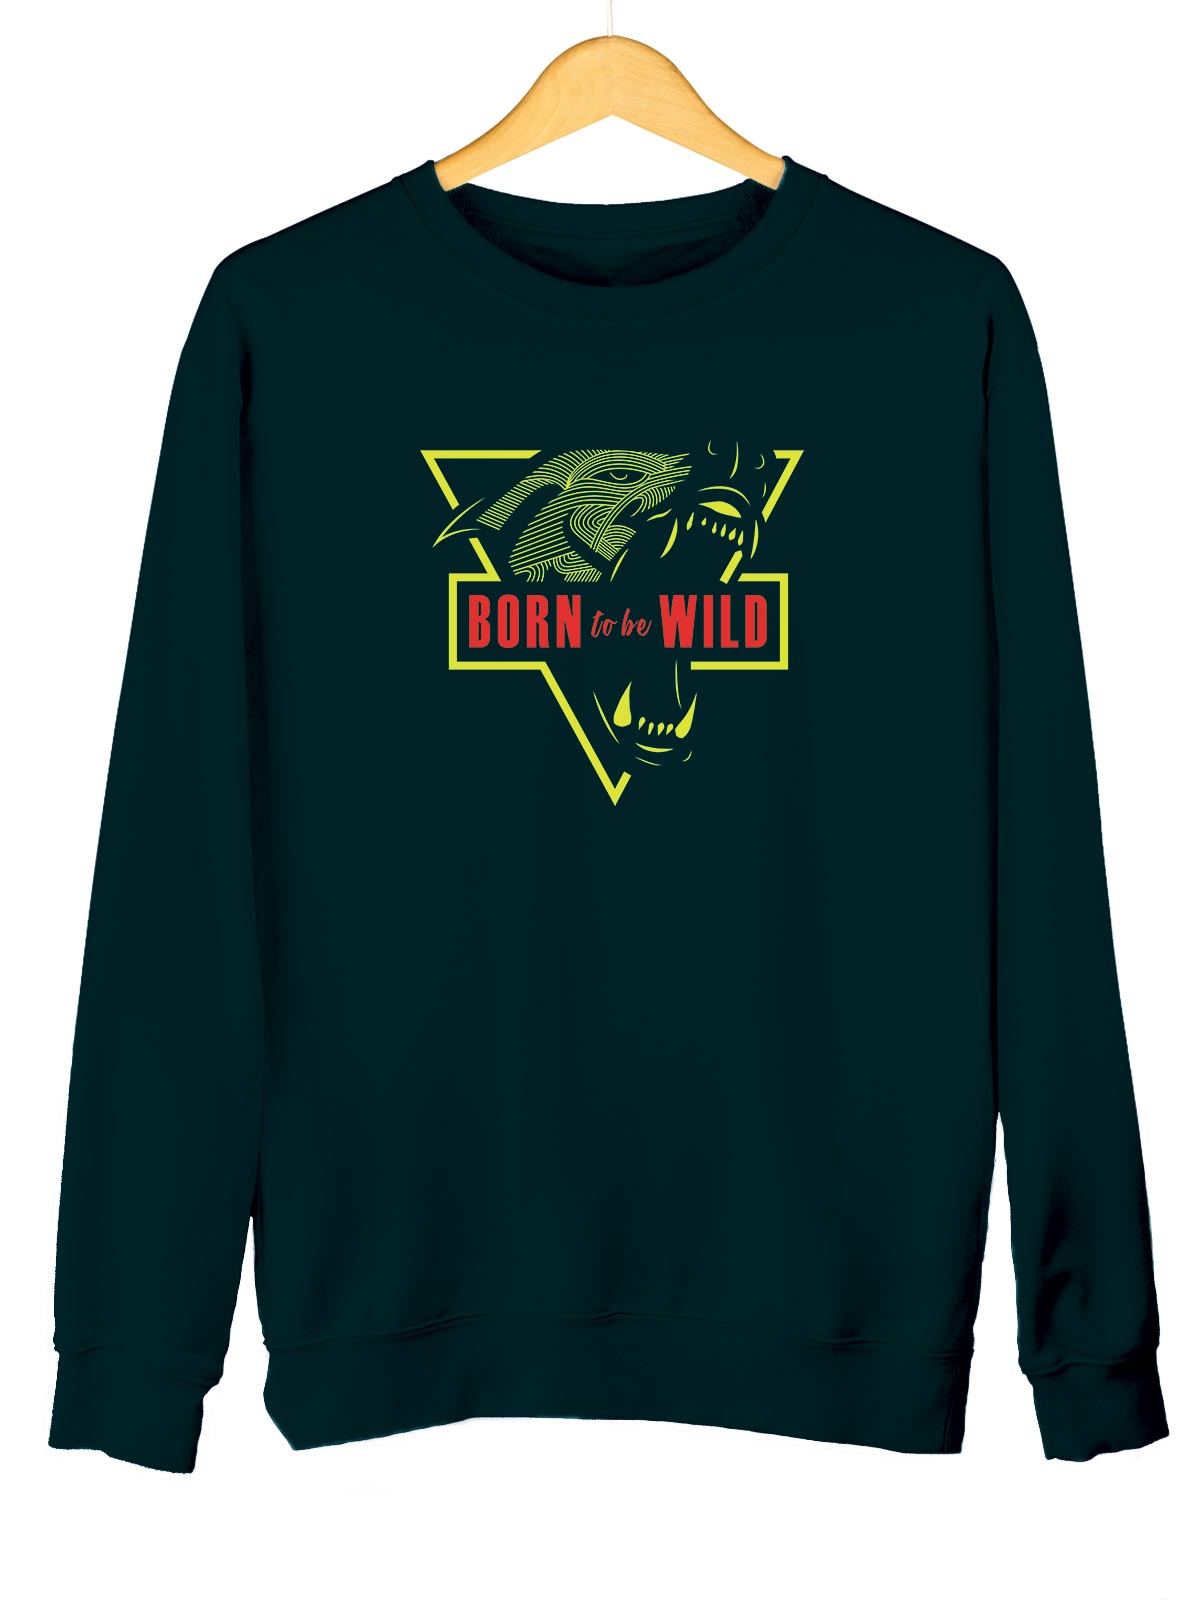 Born to be wild | Printed Unisex Sweatshirt